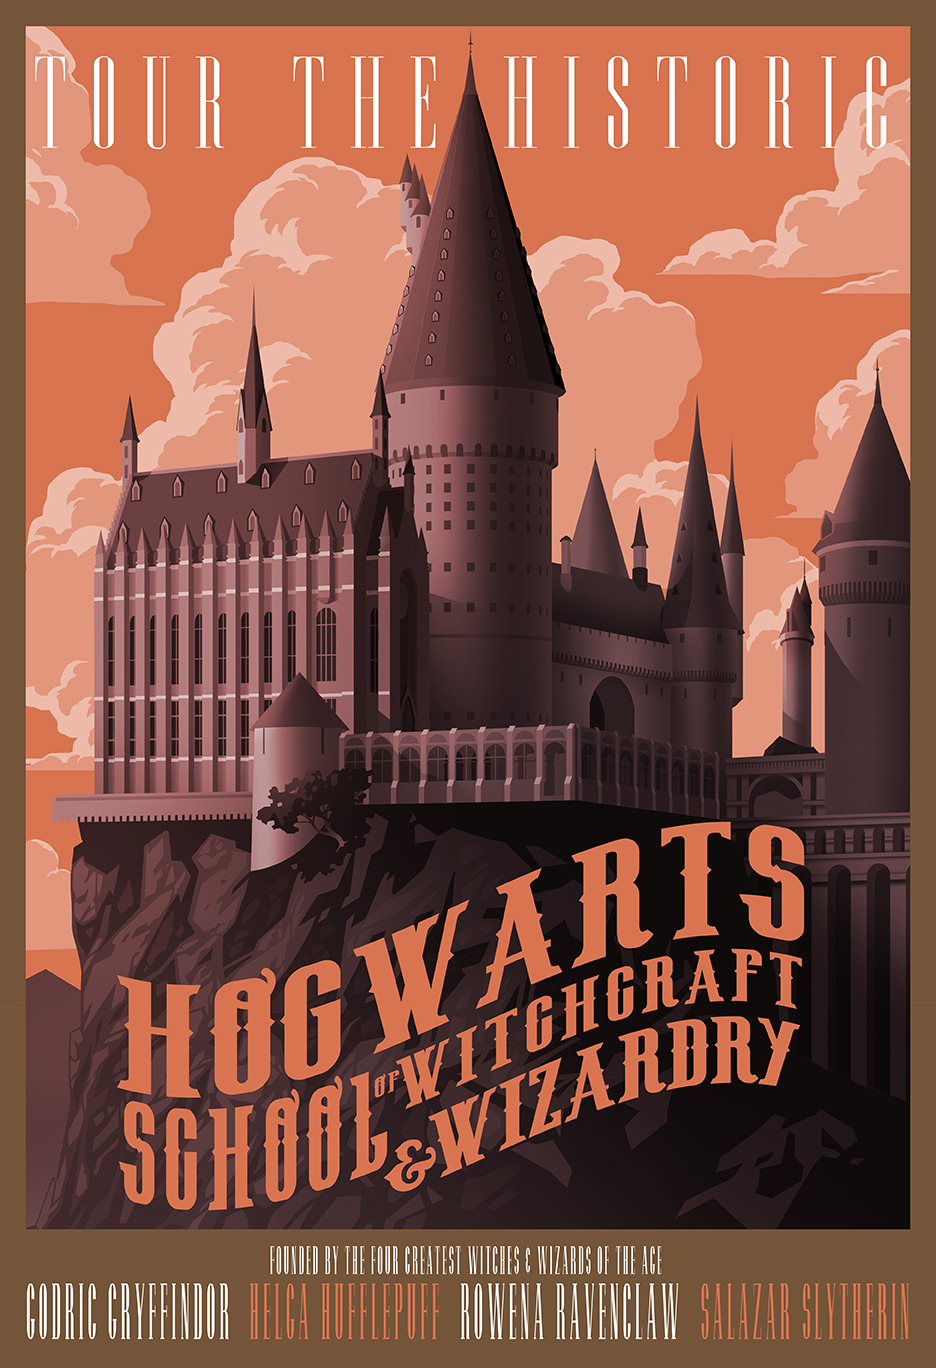 Tour Hogwarts Castle by Christopher Ables